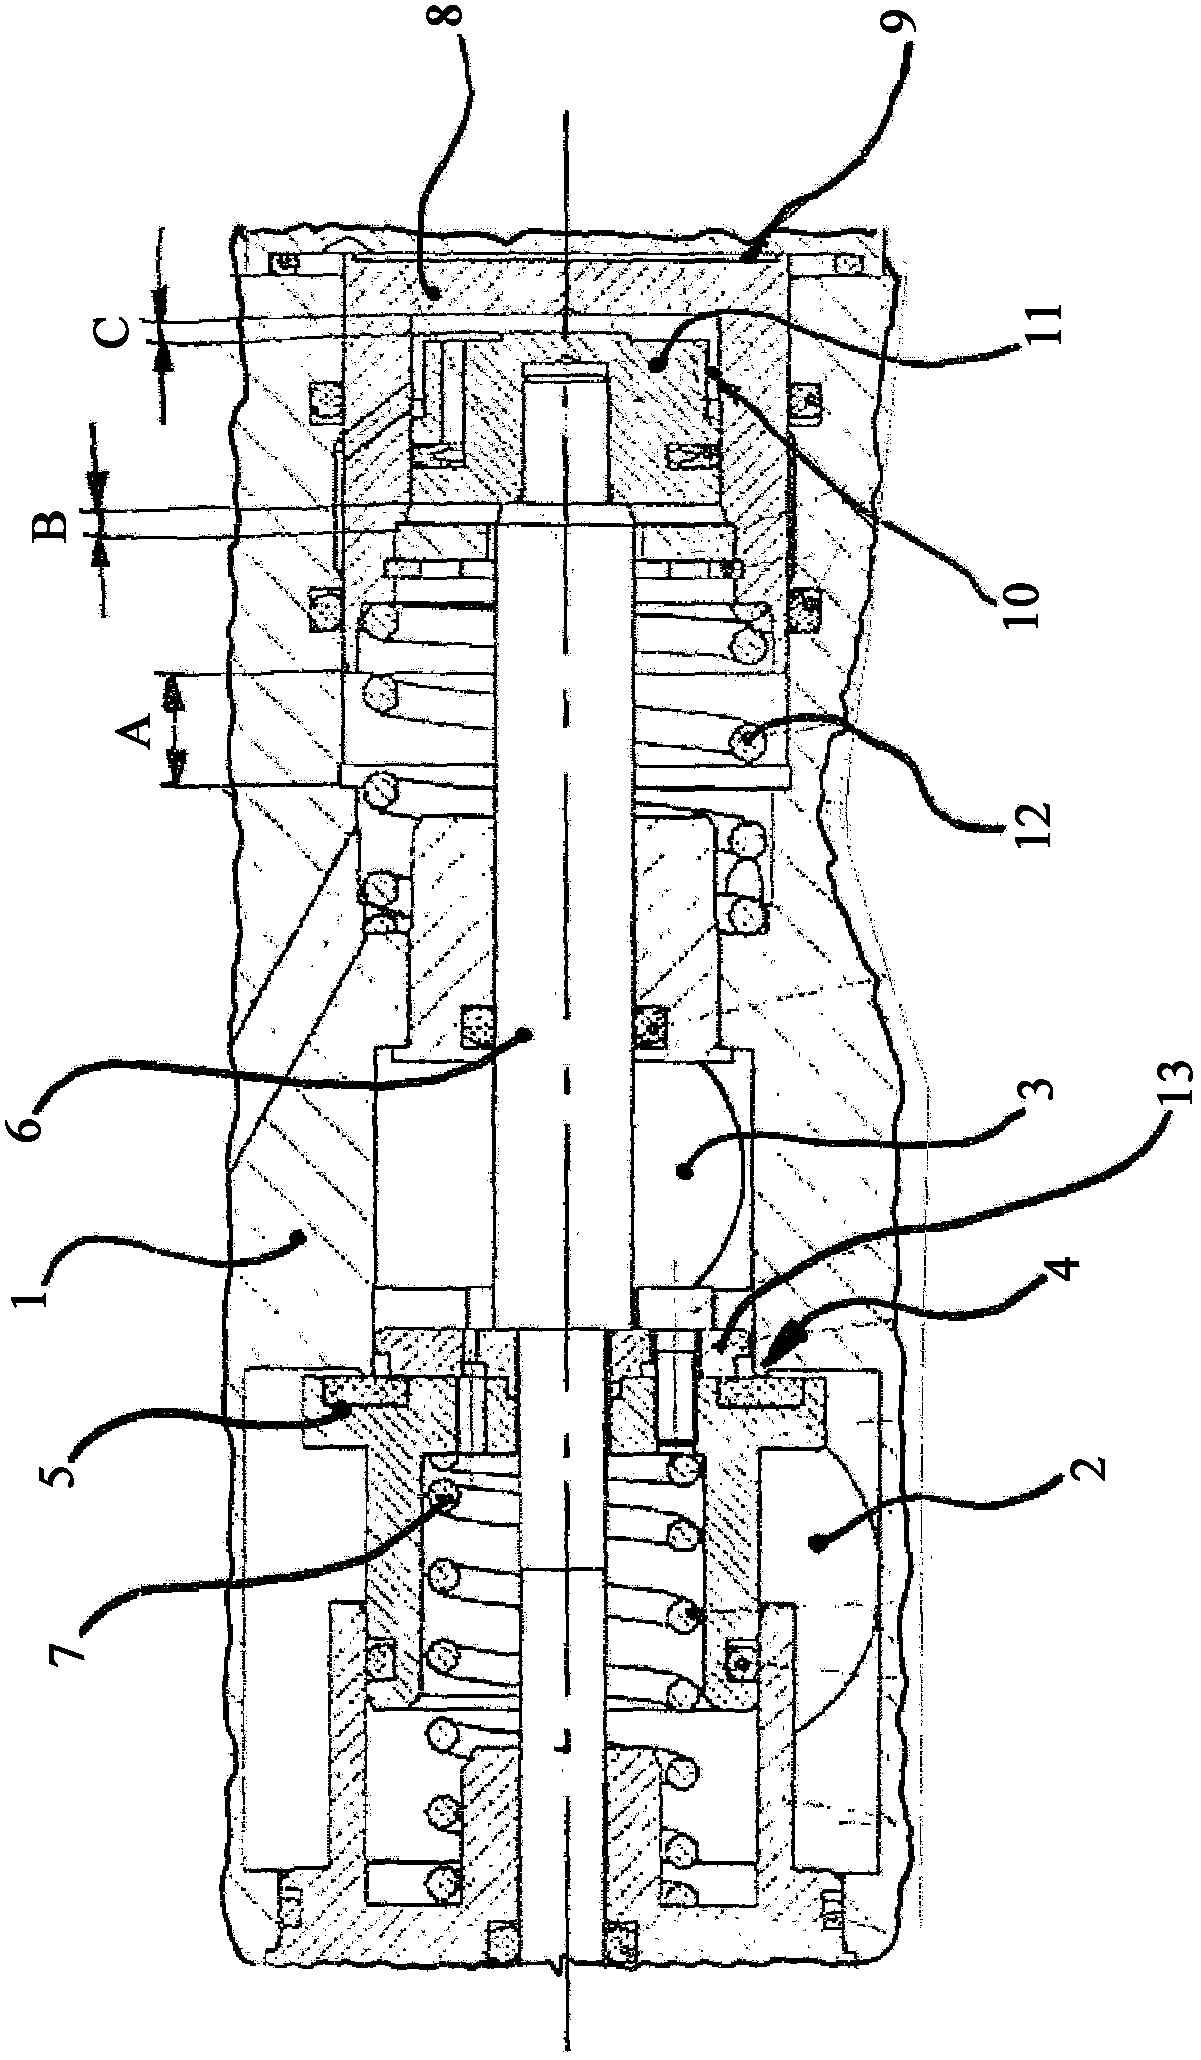 Multi-stage switchable pilot-controlled valve arrangement